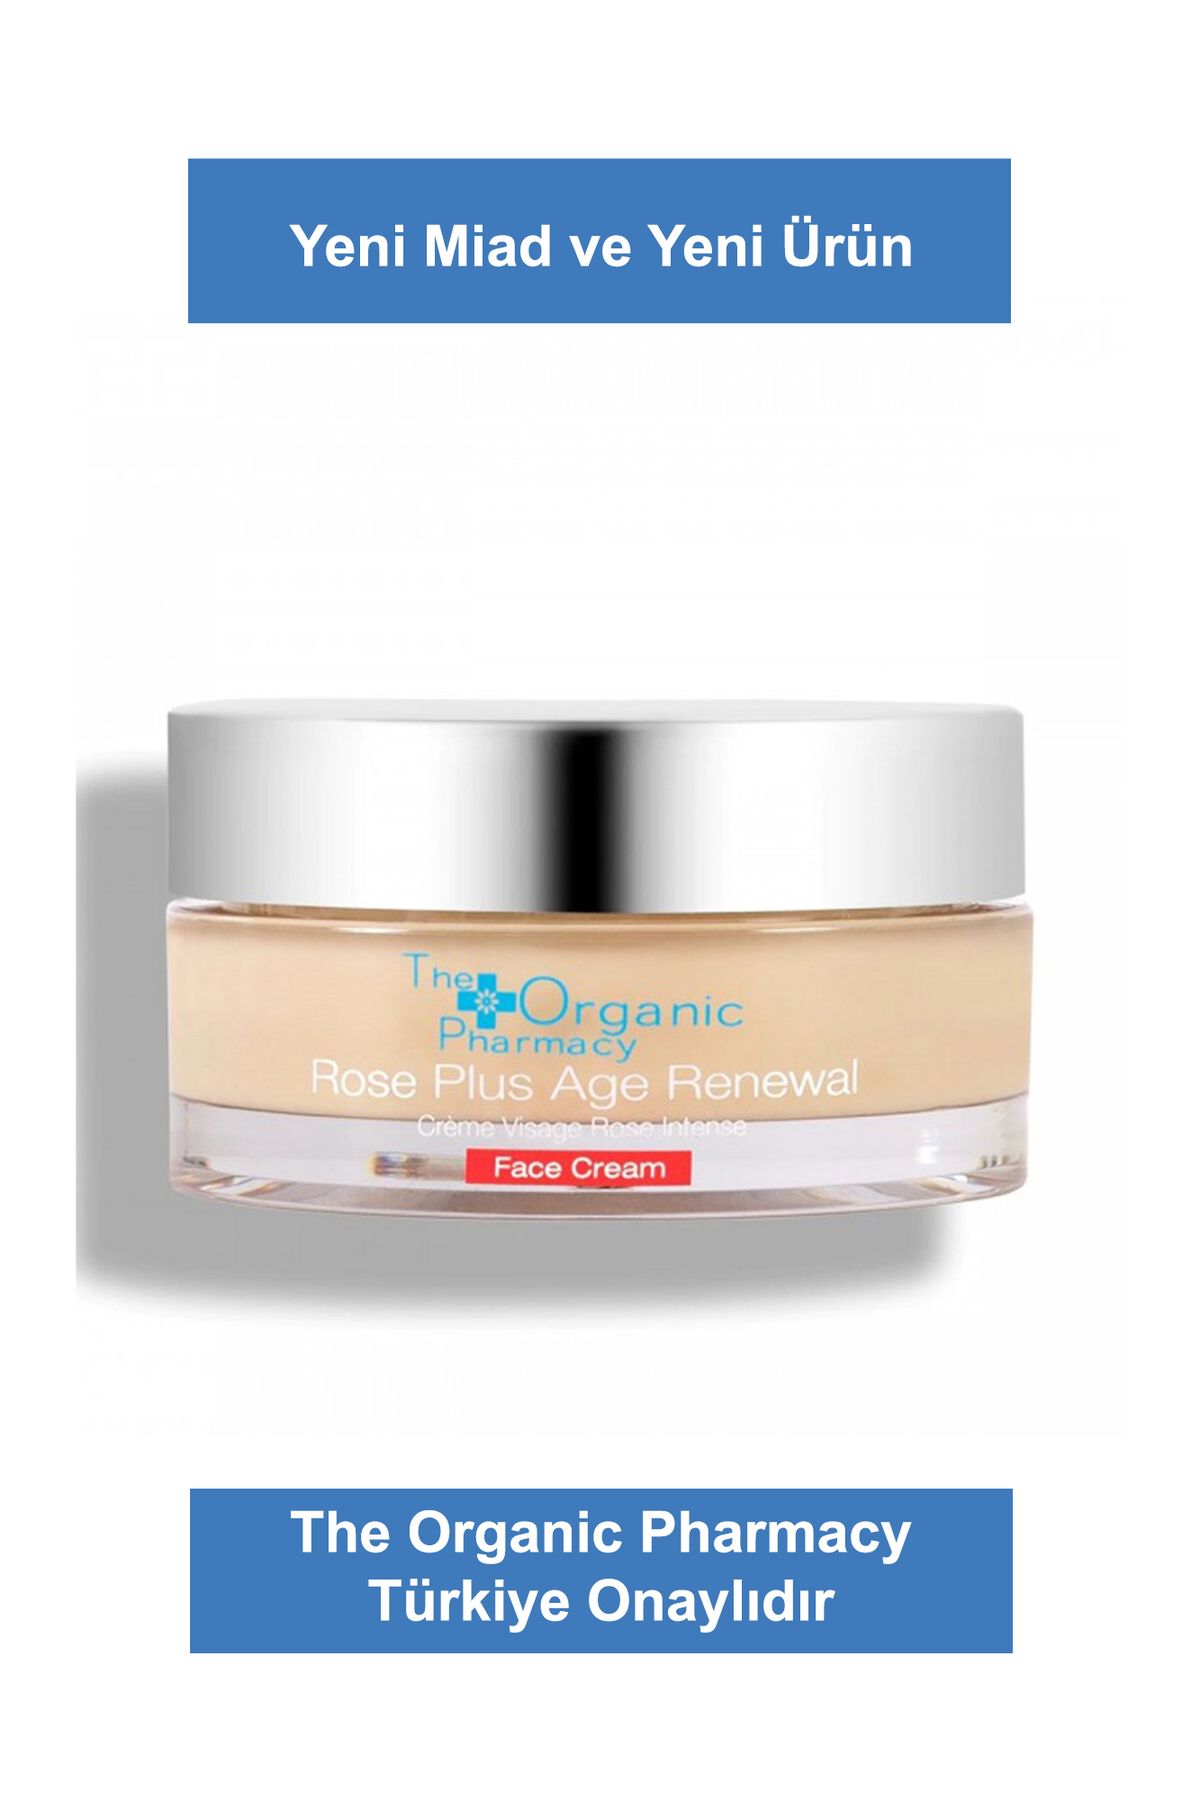 The Organic Pharmacy Rose Plus Age Renewal Anti-Ageing Face Cream 50 ml ( Yeni Ürün Uzun Miad )